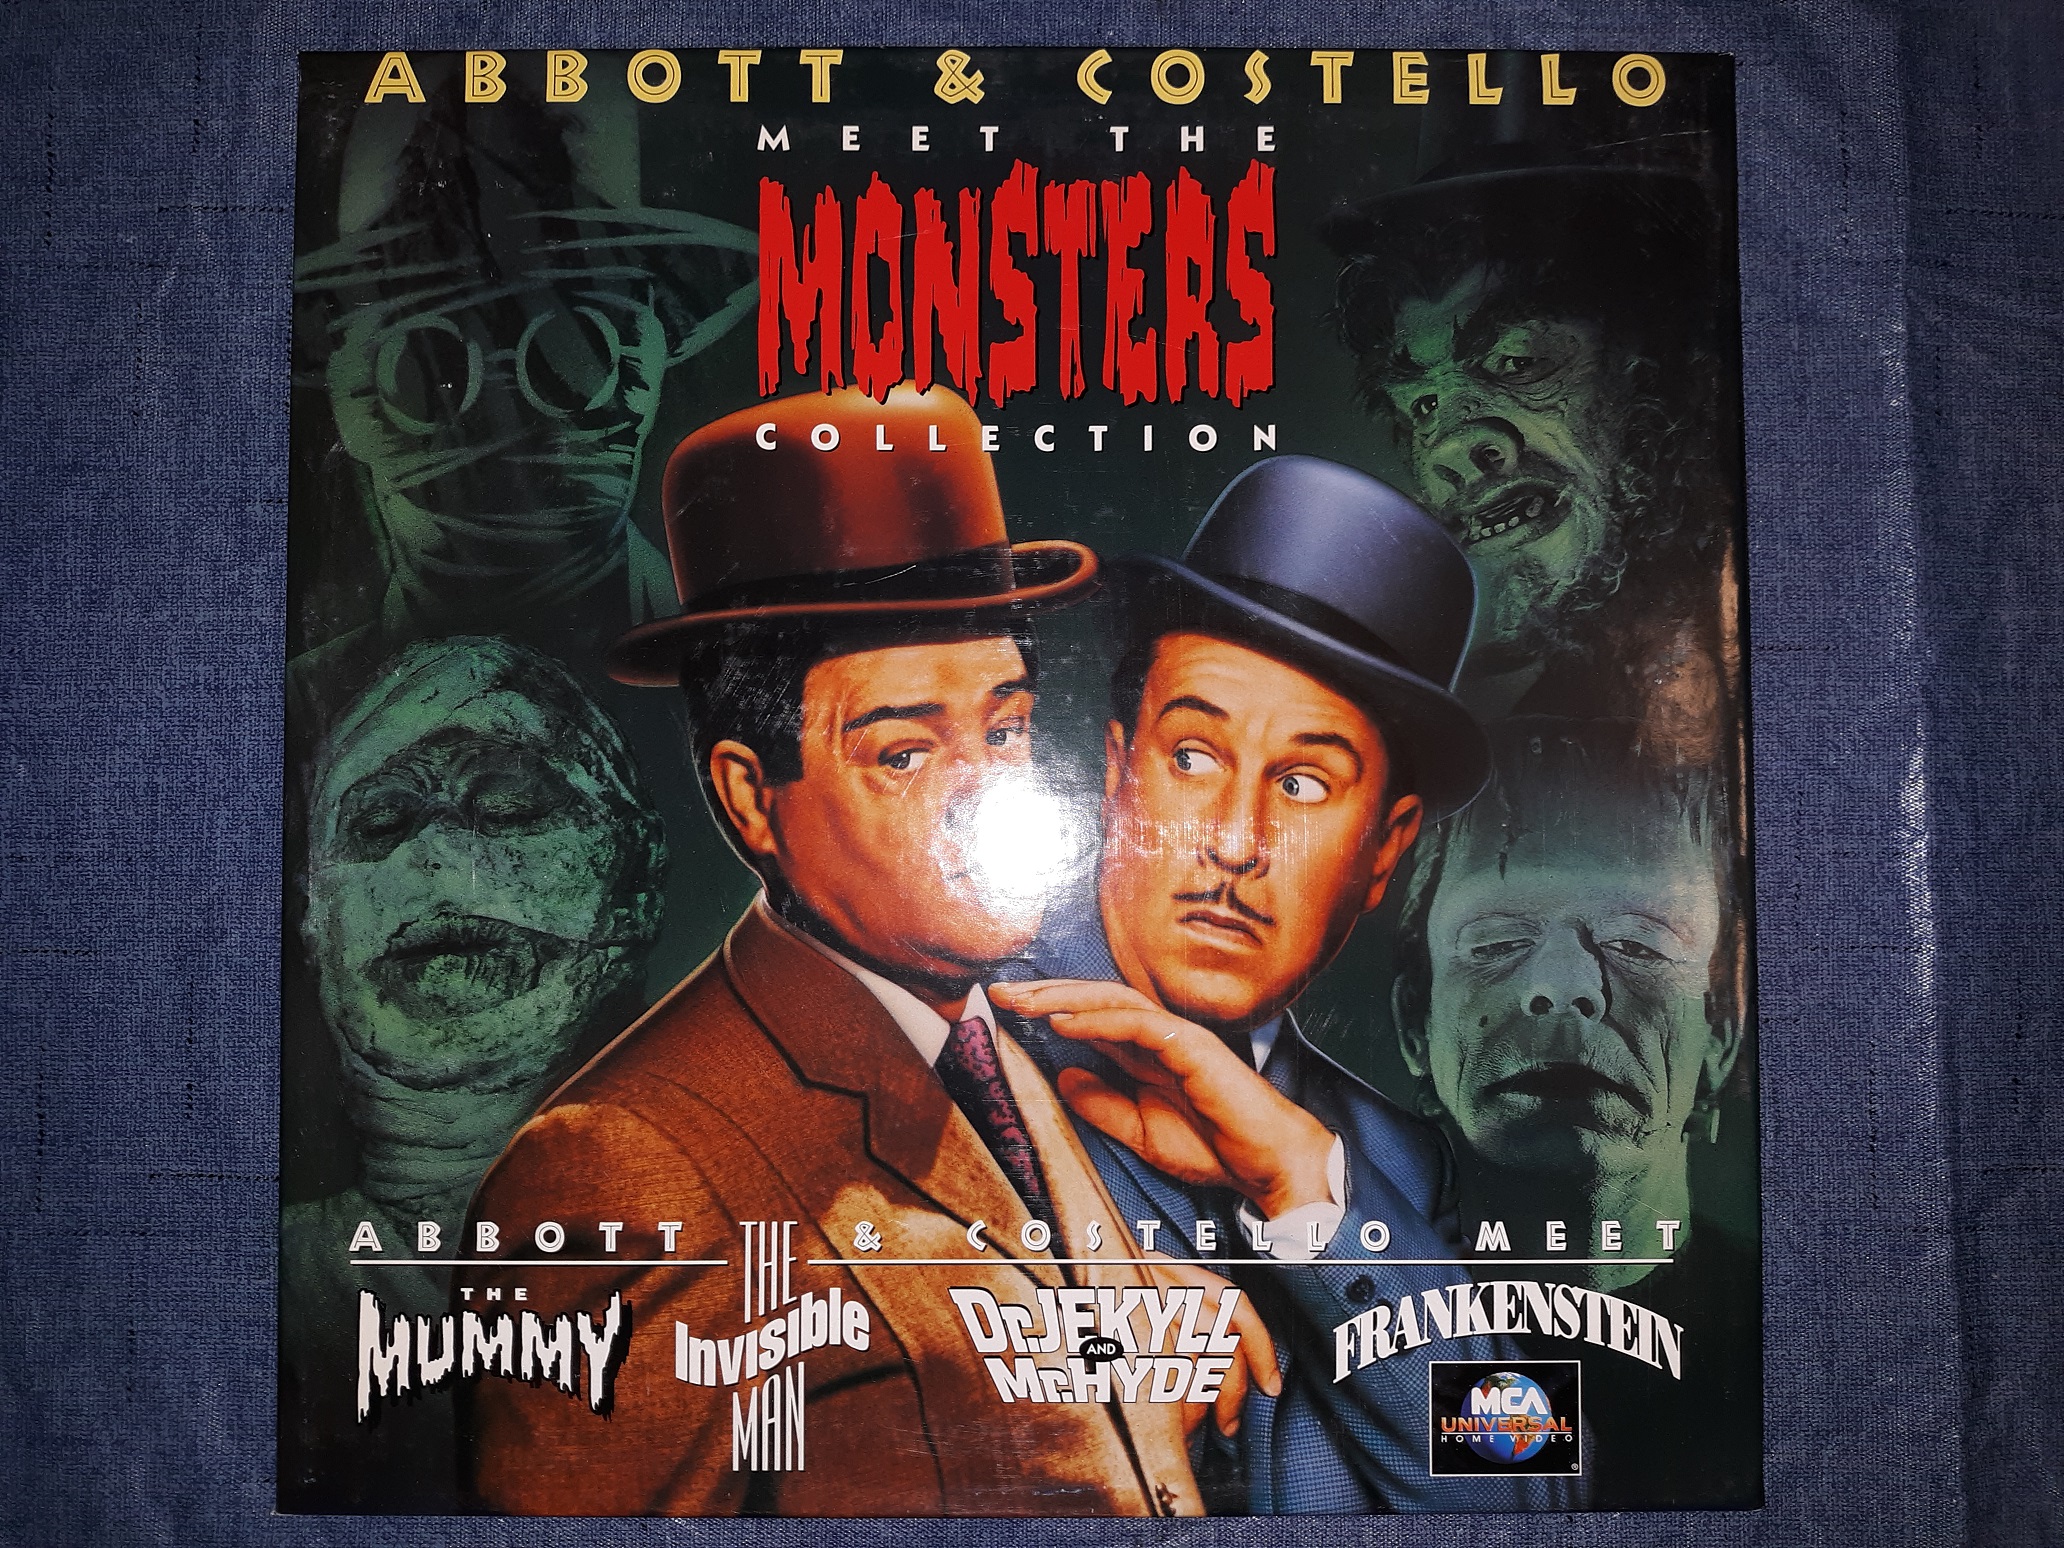 Abbott & Costello Meet the Monsters Collection (Set of 3 LaserDiscs) (1983)